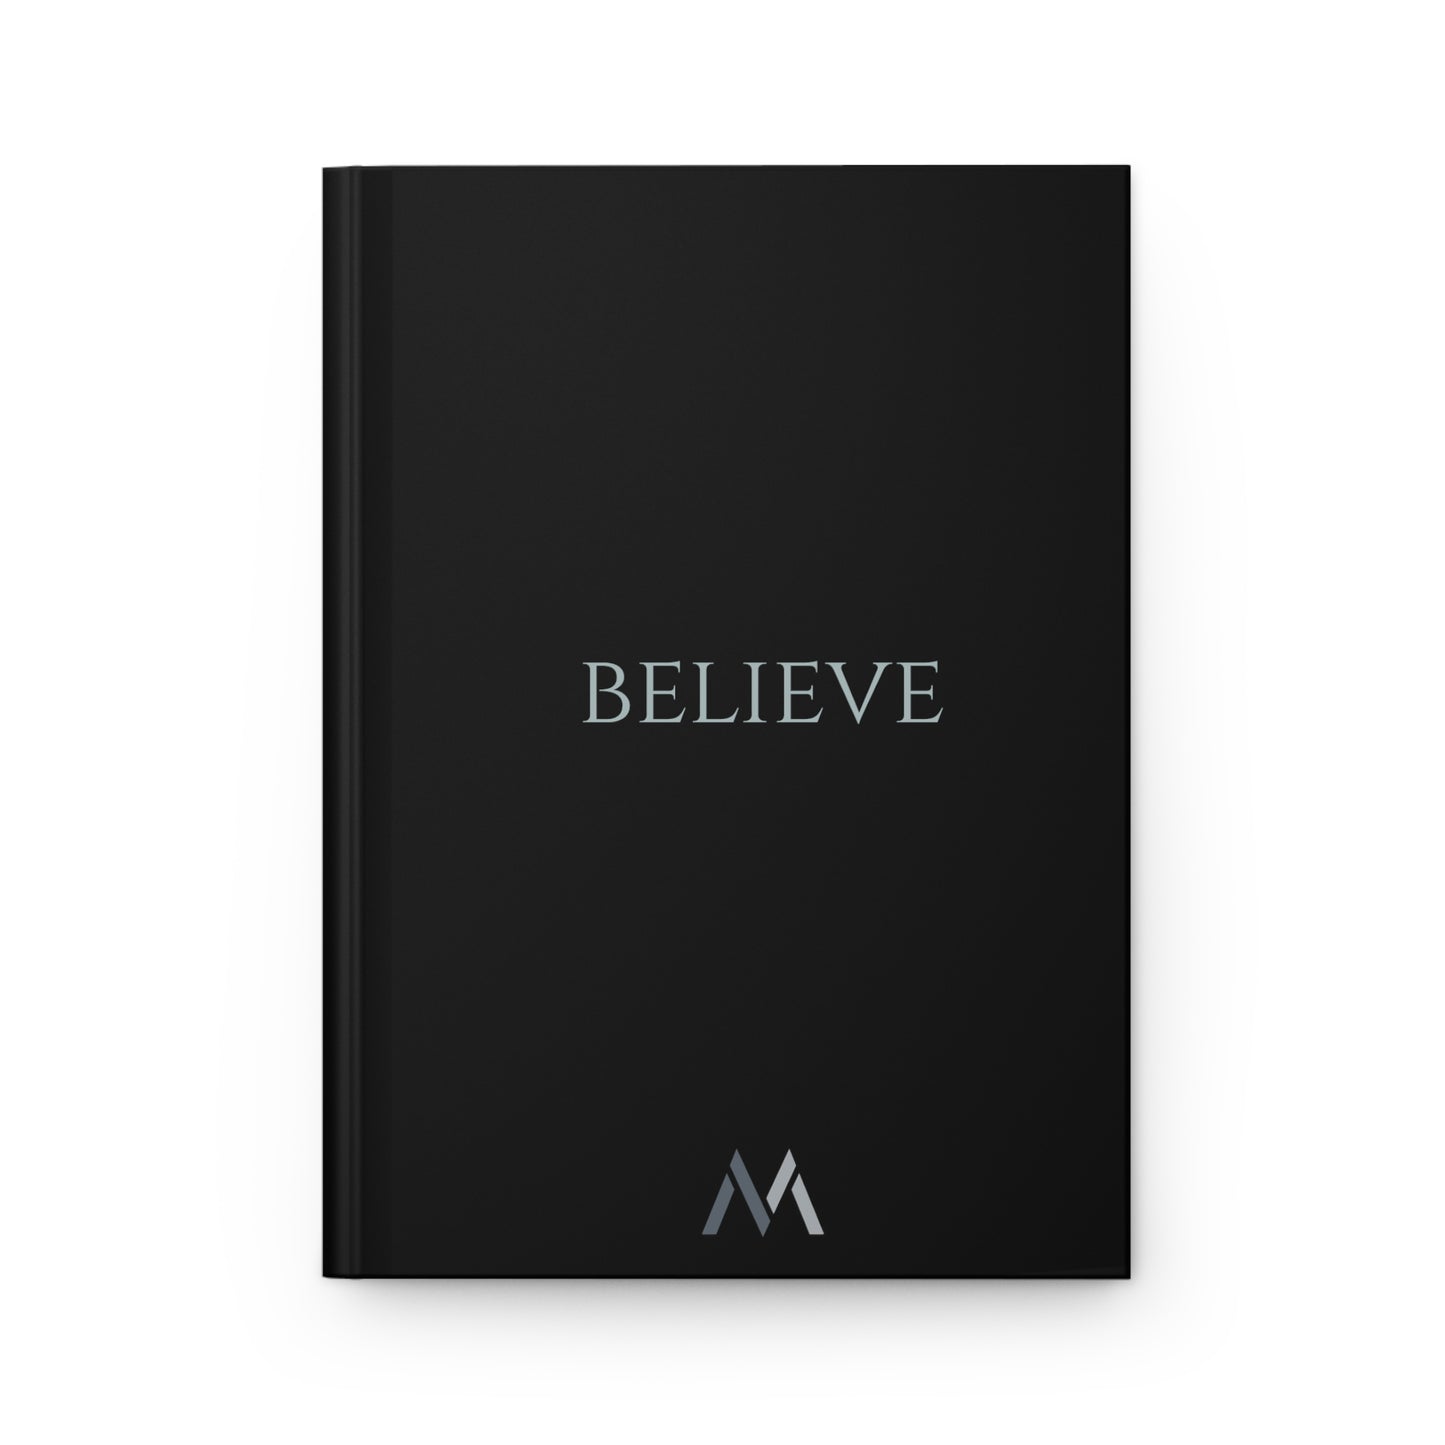 "BELIEVE" Hard Cover Matte Black Journal